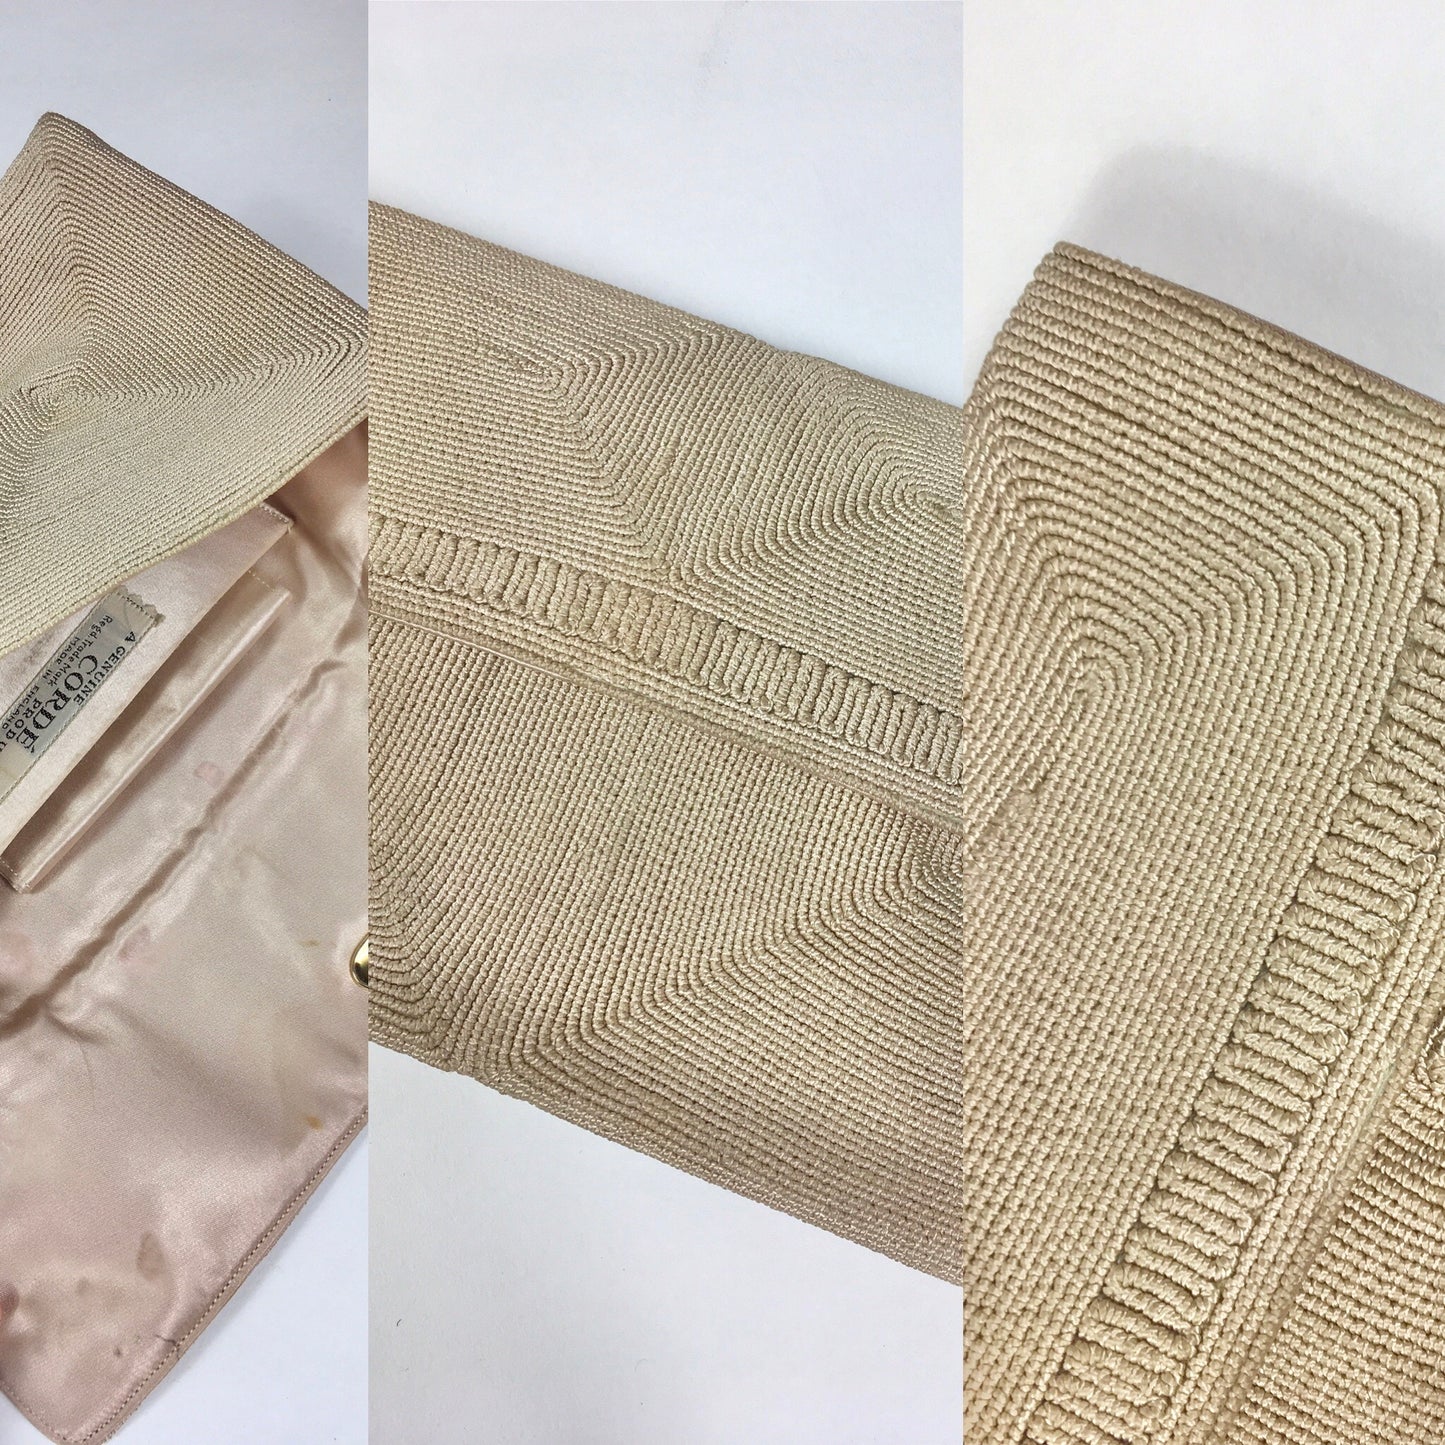 Original 1940’s Beautiful Corde Clutch Bag In Soft Beige - With Internal Purse & Mirror